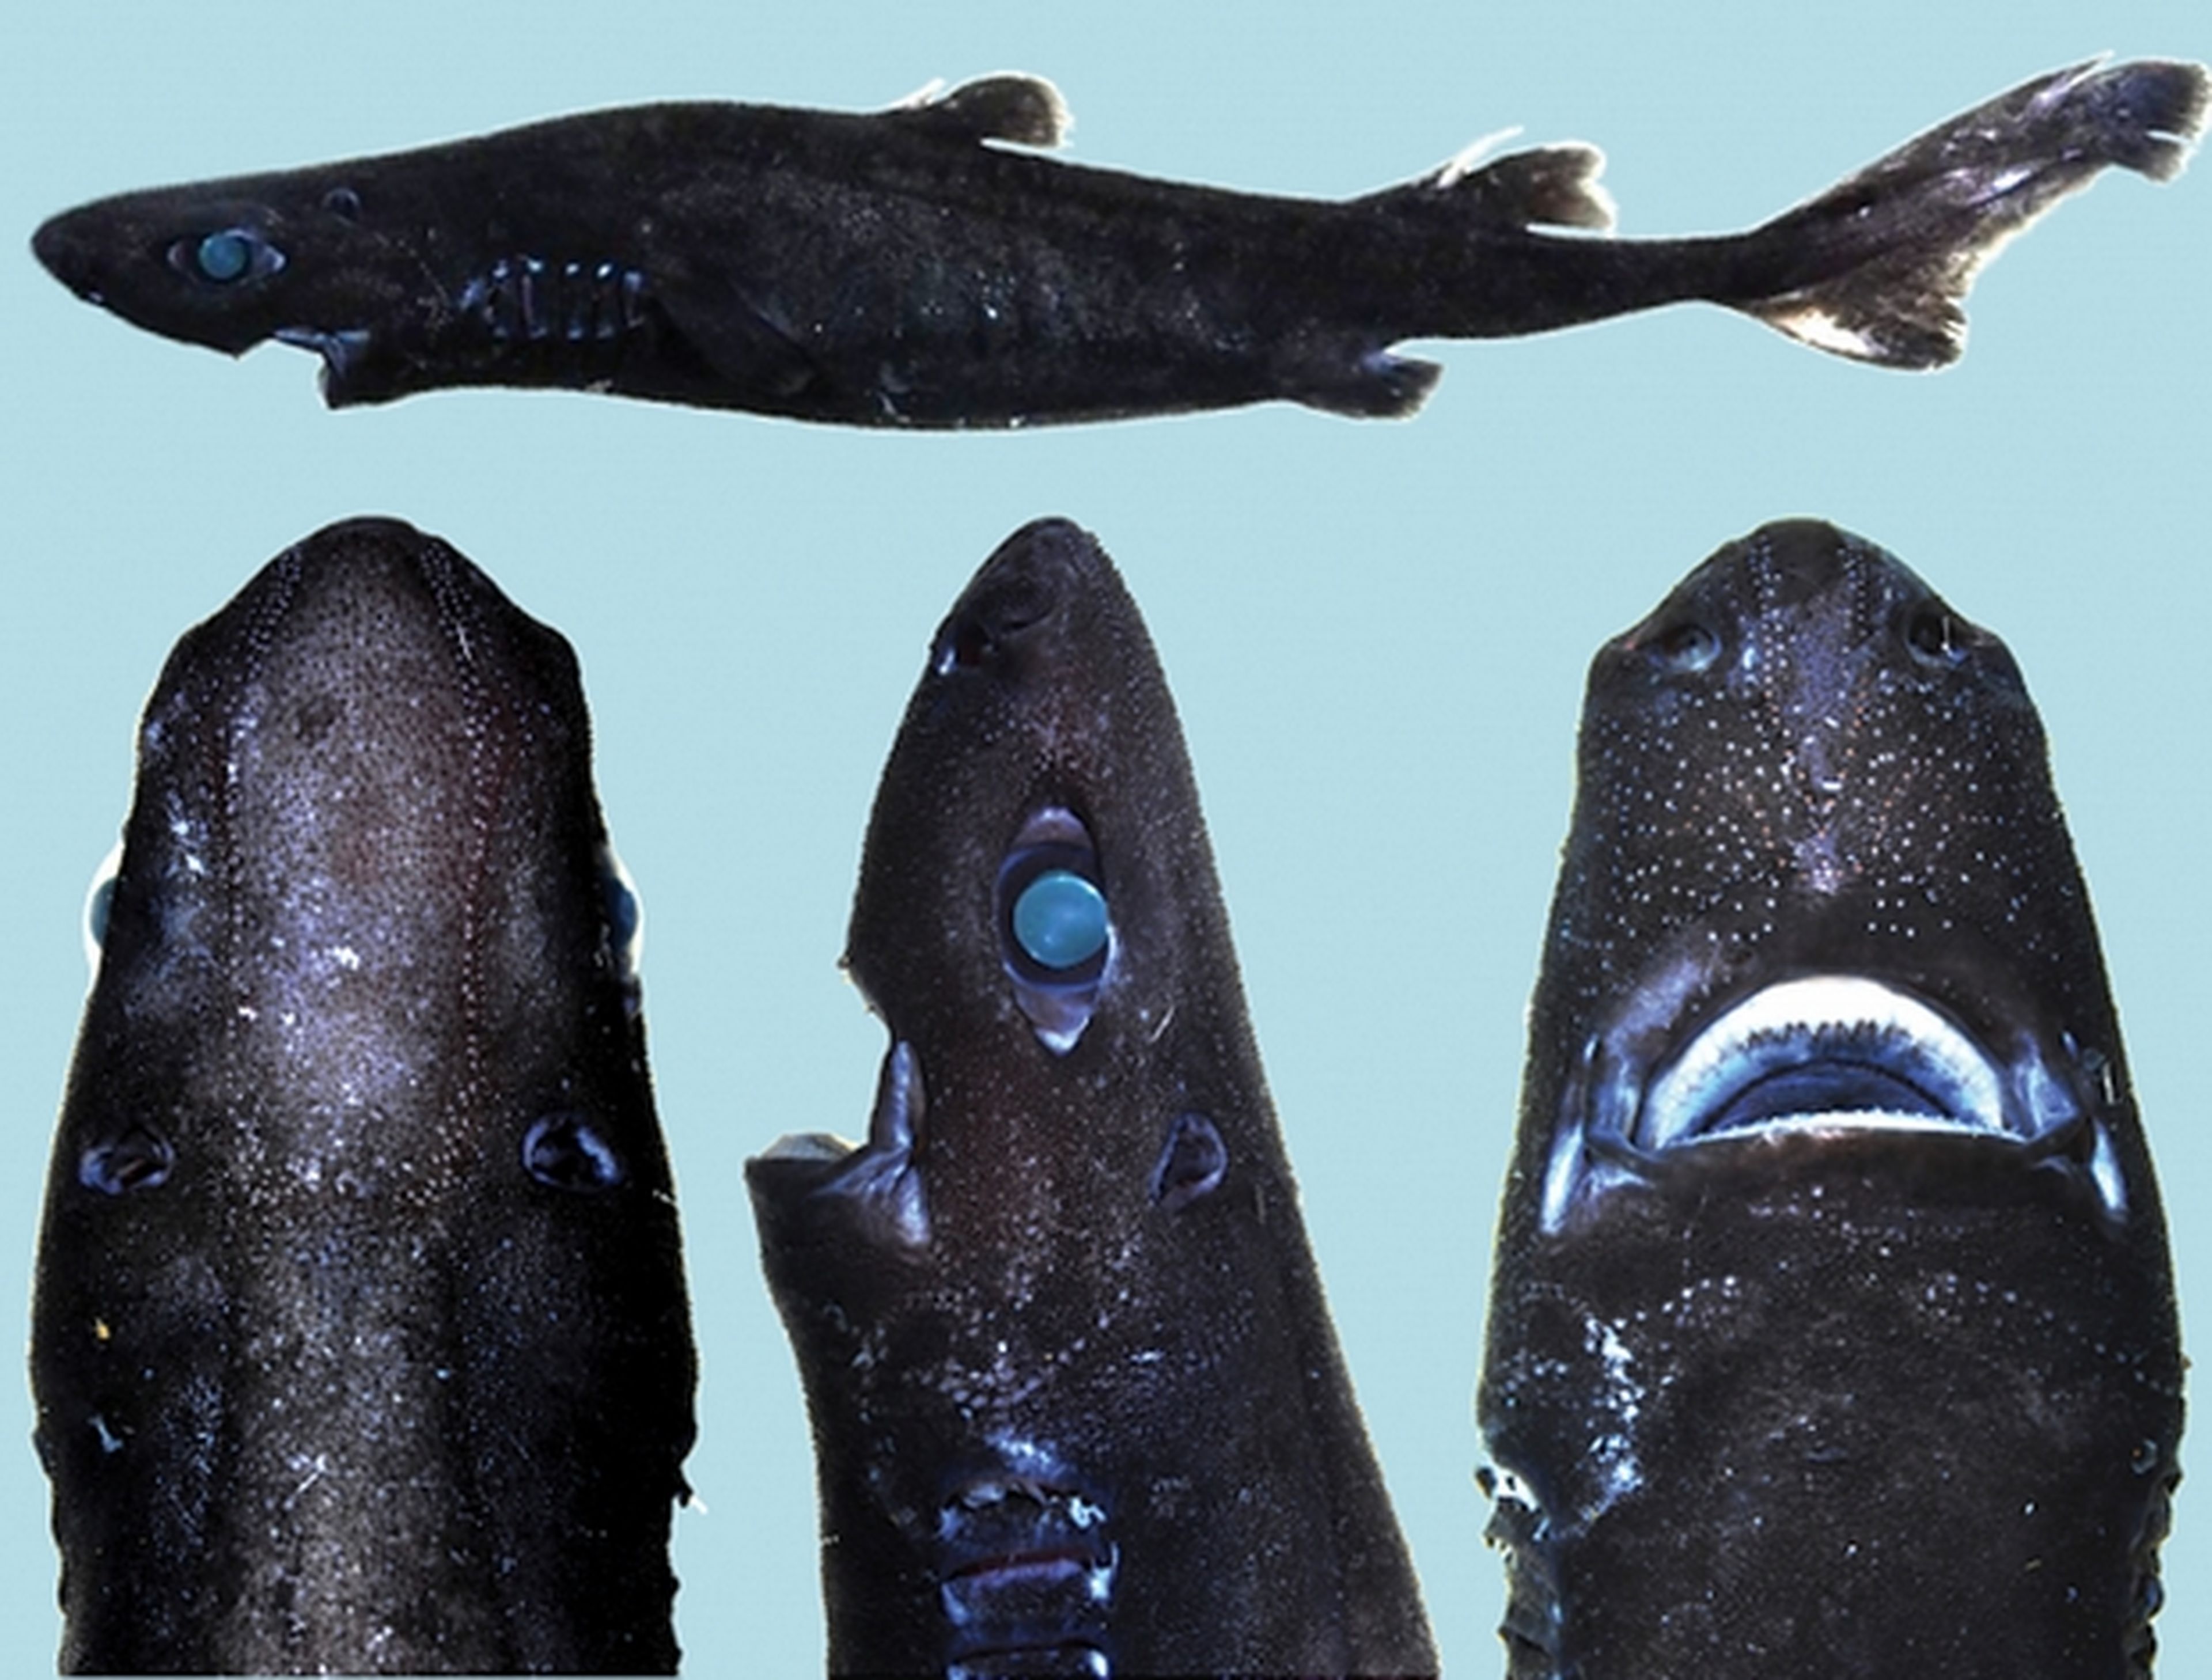 Бывает черная рыба. Бразильская большезубая акула. Etmopterus pusillus рыба. Большезубая сигарная акула. Бразильская светящаяся акула.